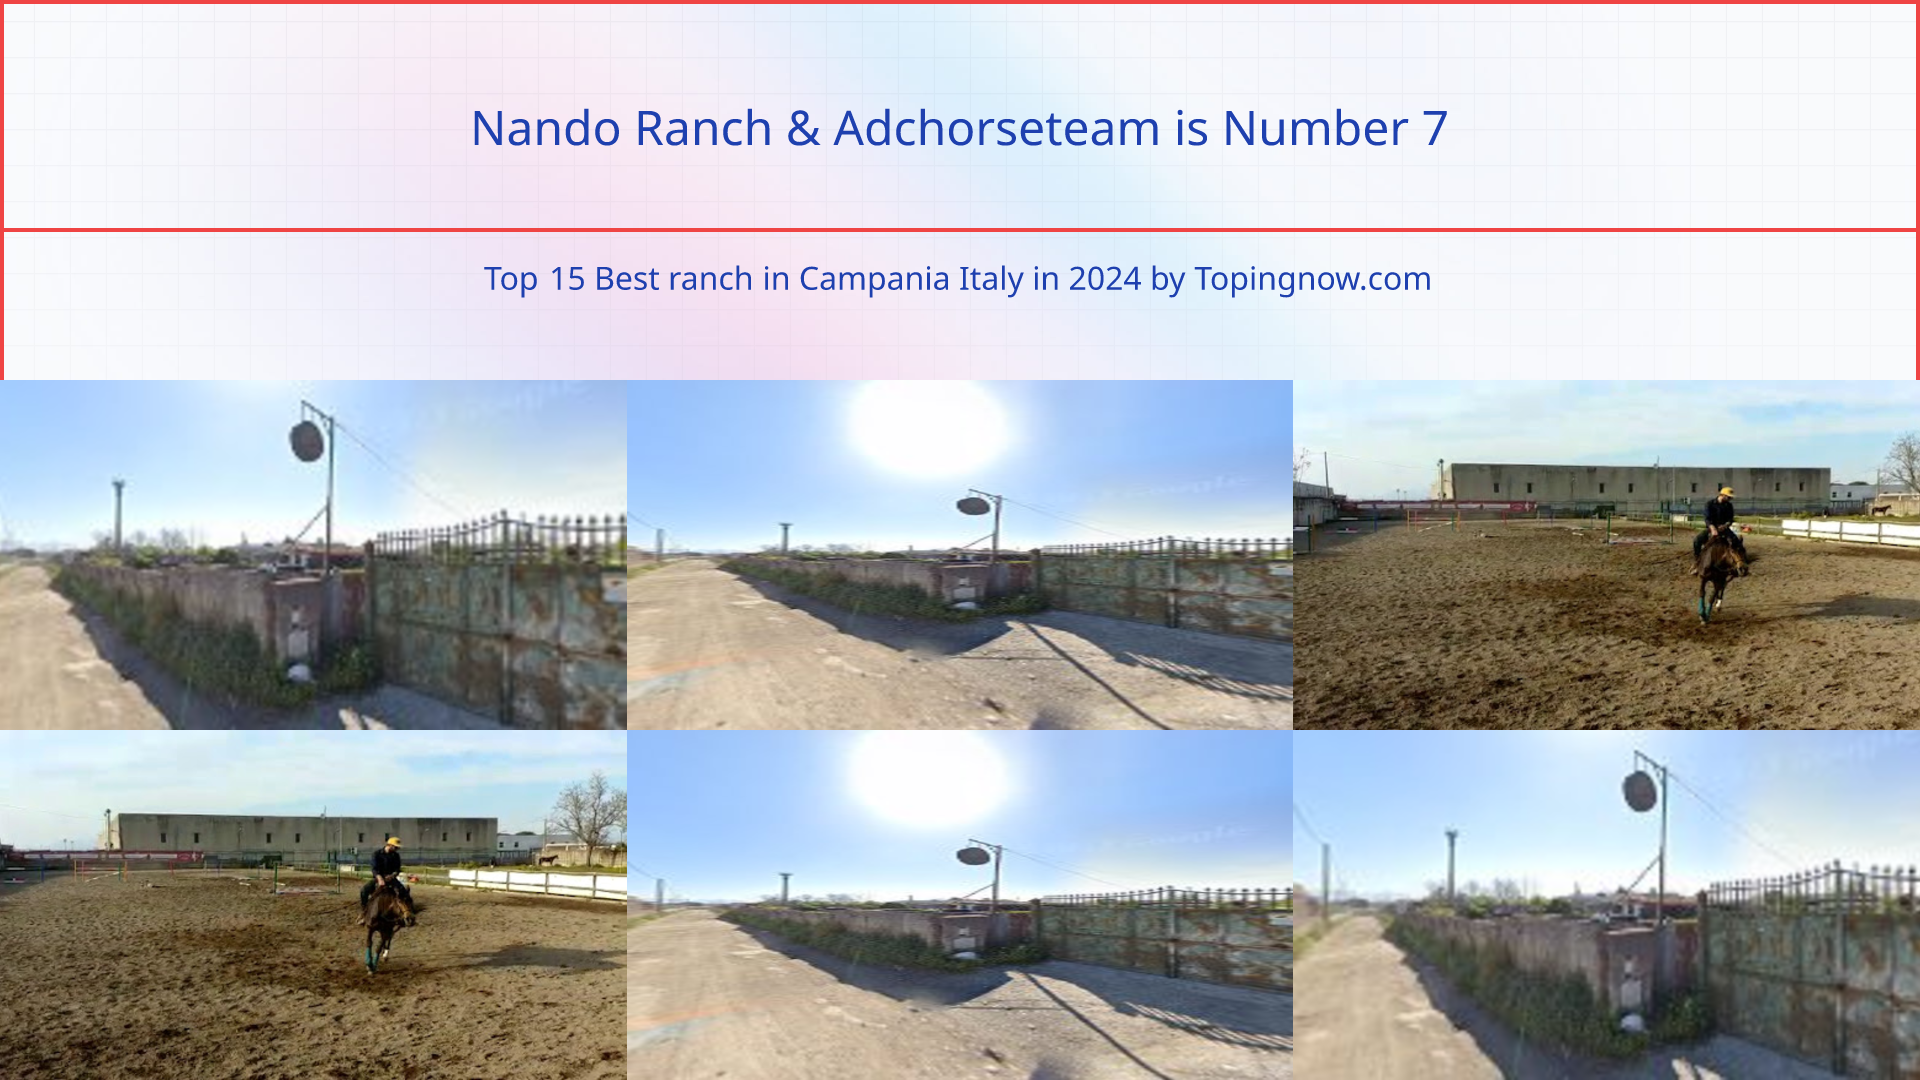 Nando Ranch & Adchorseteam: Top 15 Best ranch in Campania Italy in 2024